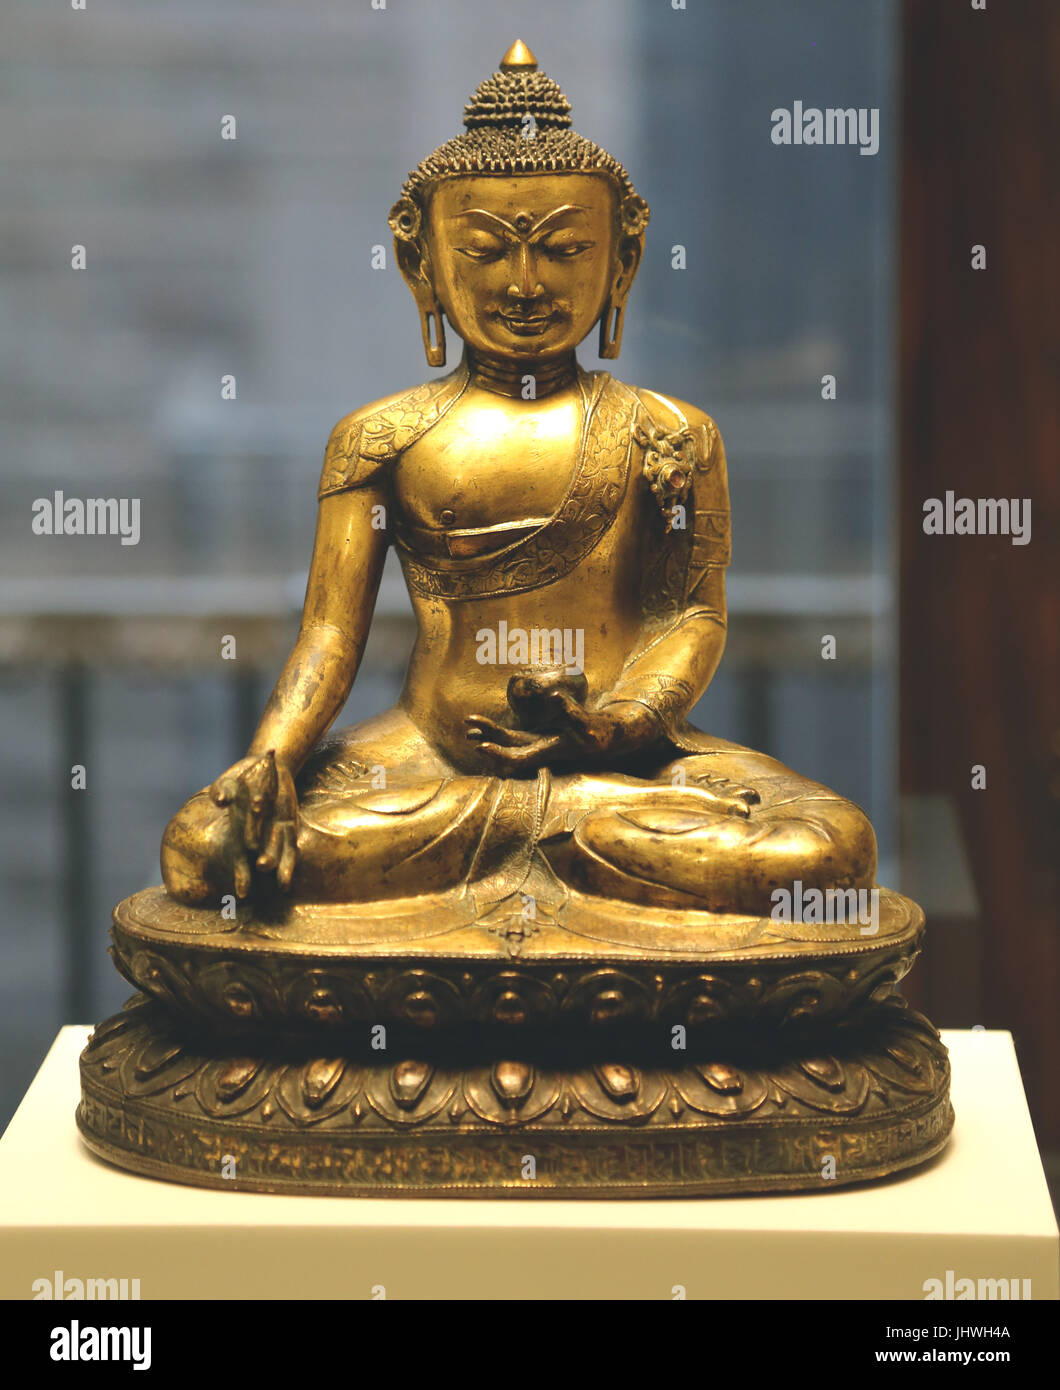 The Medicine Buddha, Bhaisajyaguru. Western Tibet, 18th and 19th century. Golden copper figure. King of healing. Stock Photo